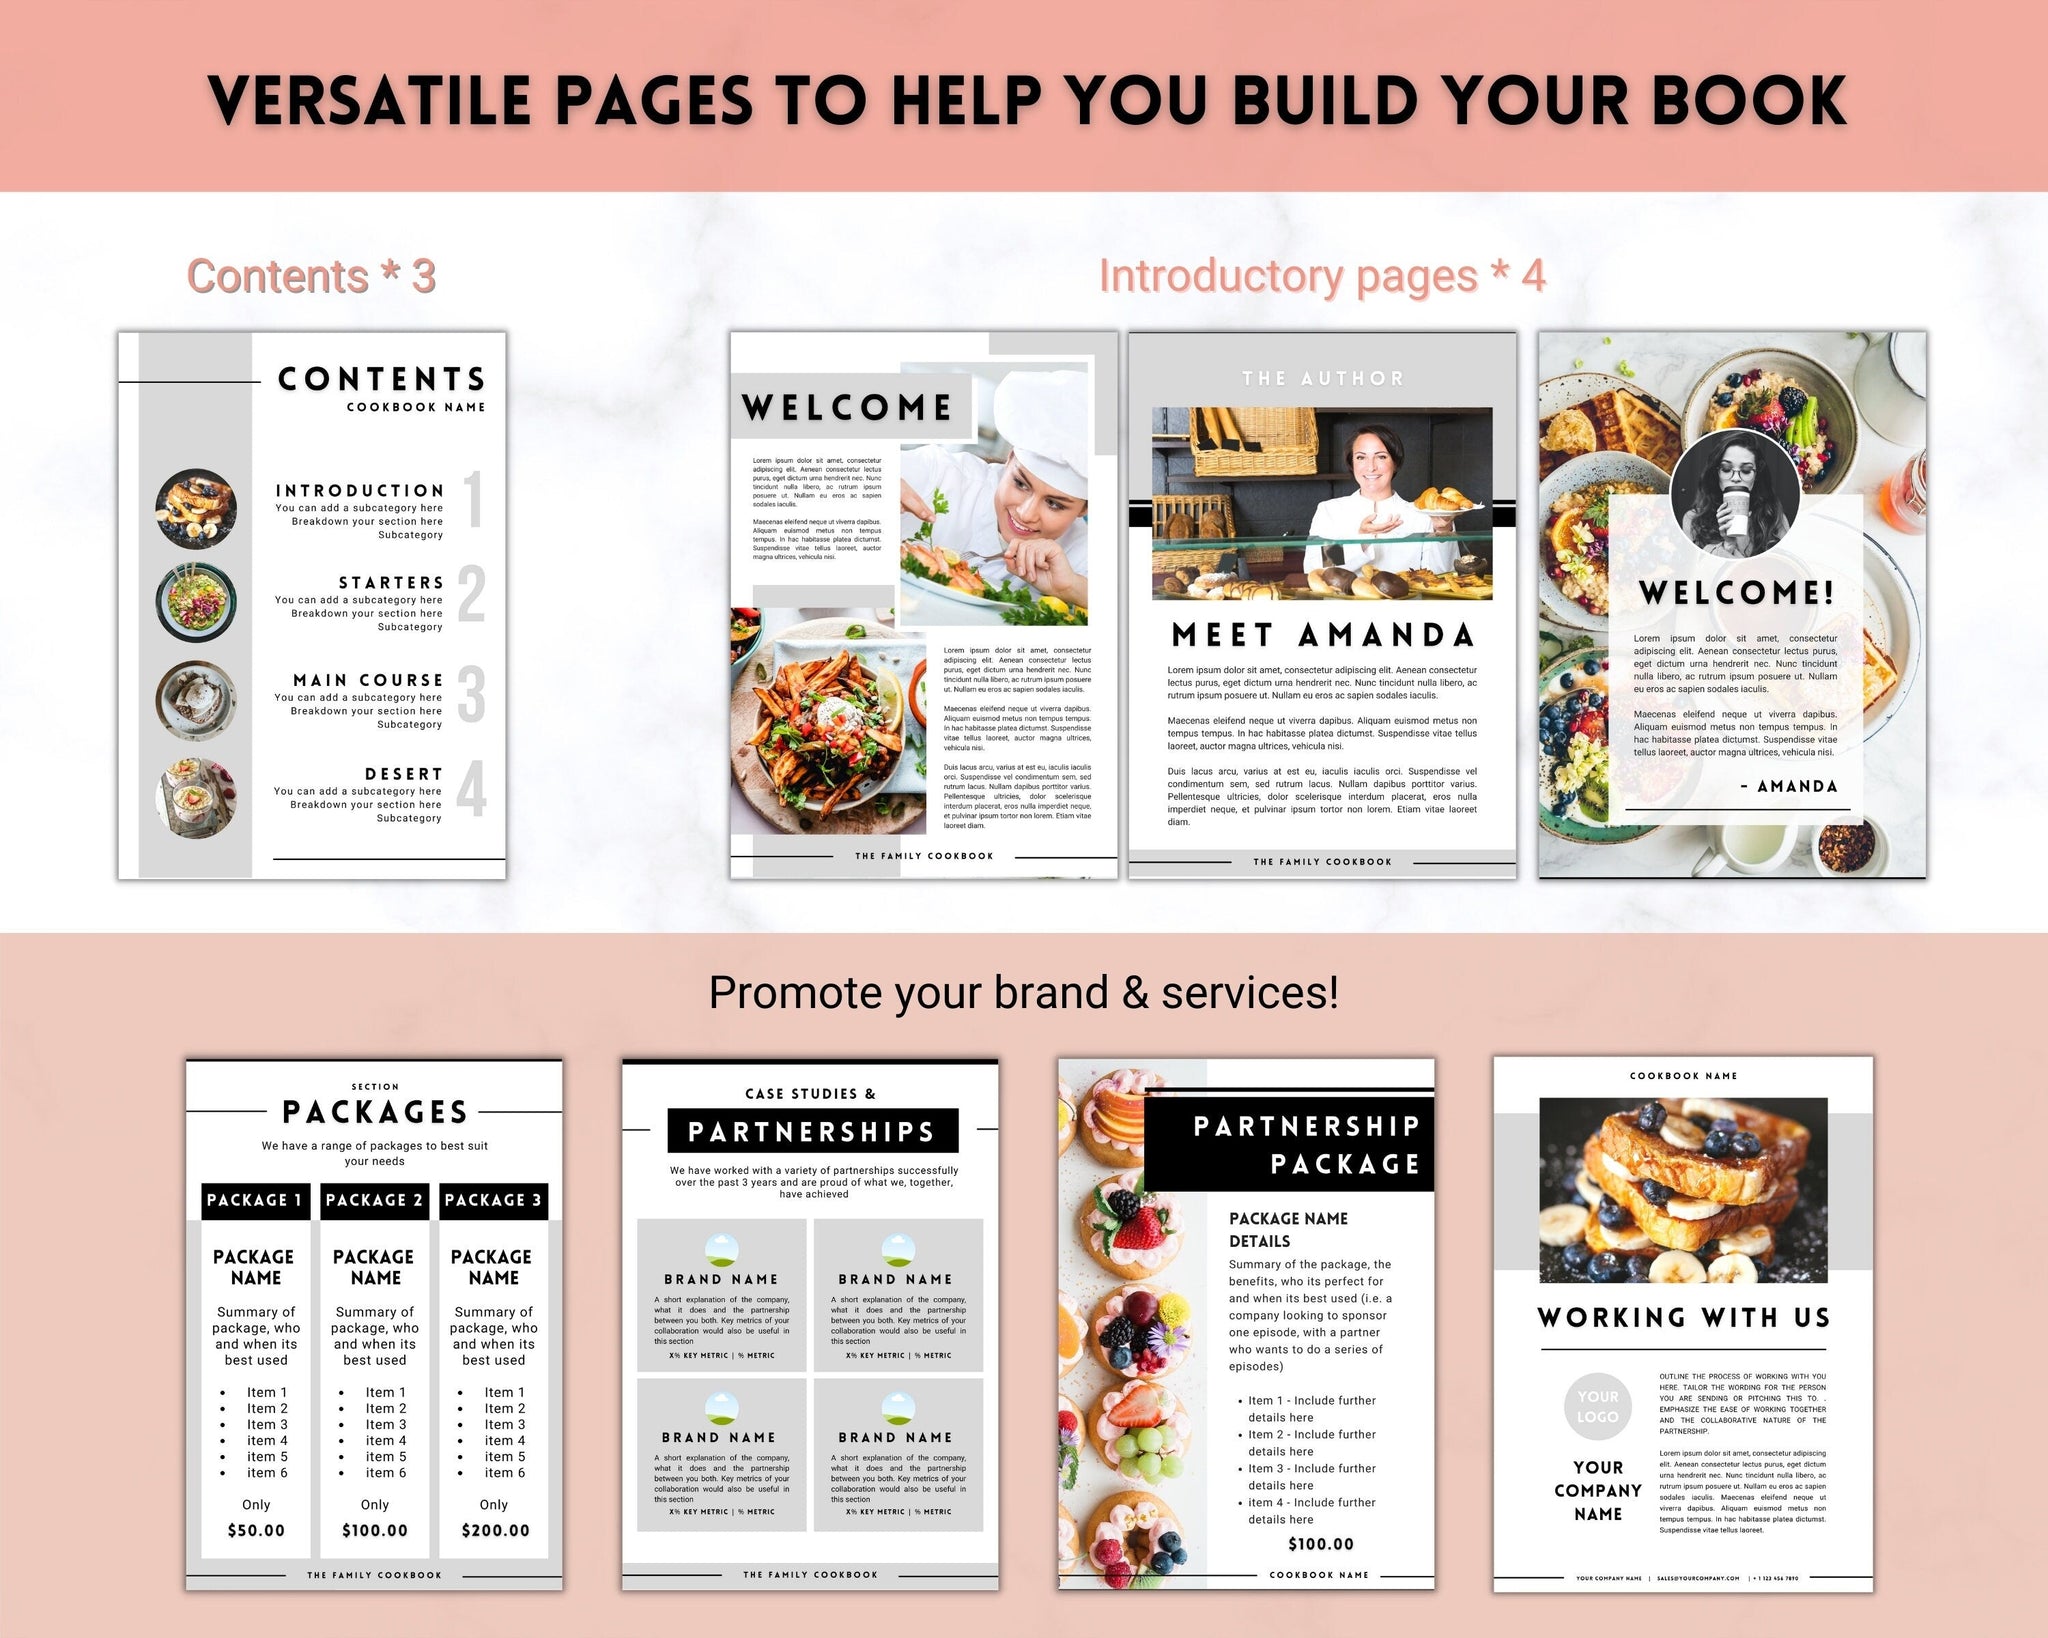 Cookbook Template, Canva Recipe Book Template, Editable Ebook, Recipe Card,  Binder, Box, Meal Planner, Family Cooking , Recipe Page Workbook 